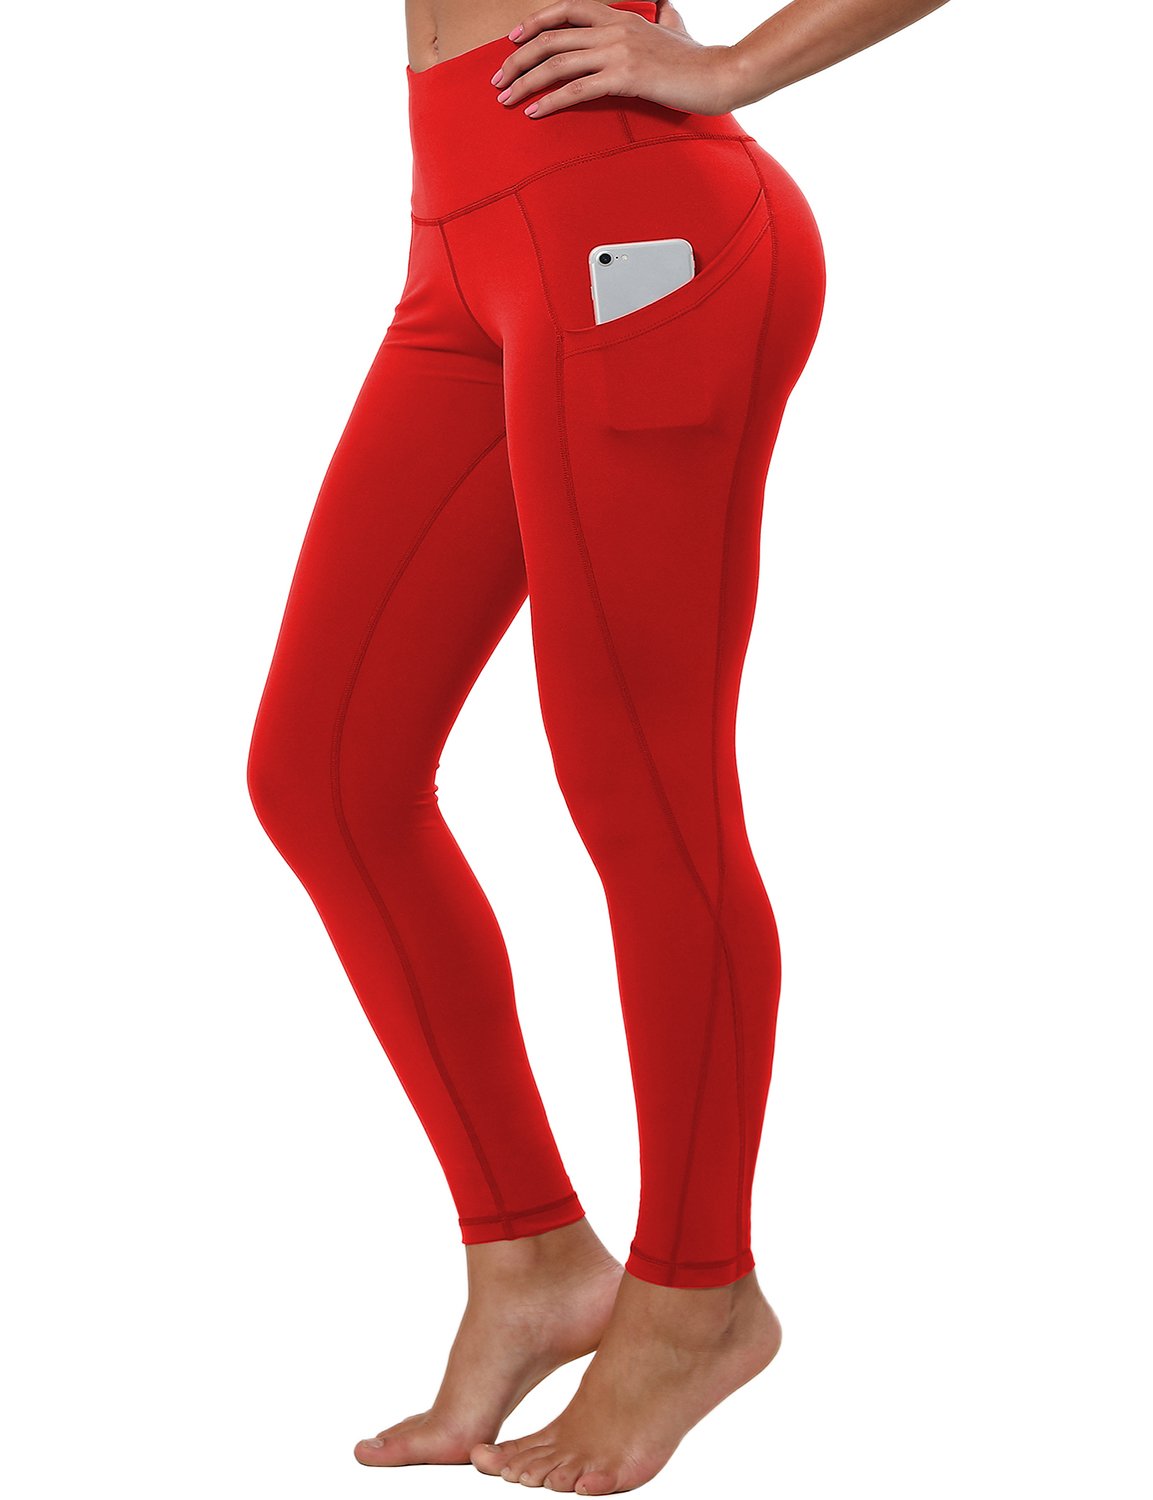 Noli Yoga Red Buddha Yoga Pants - Product Review 